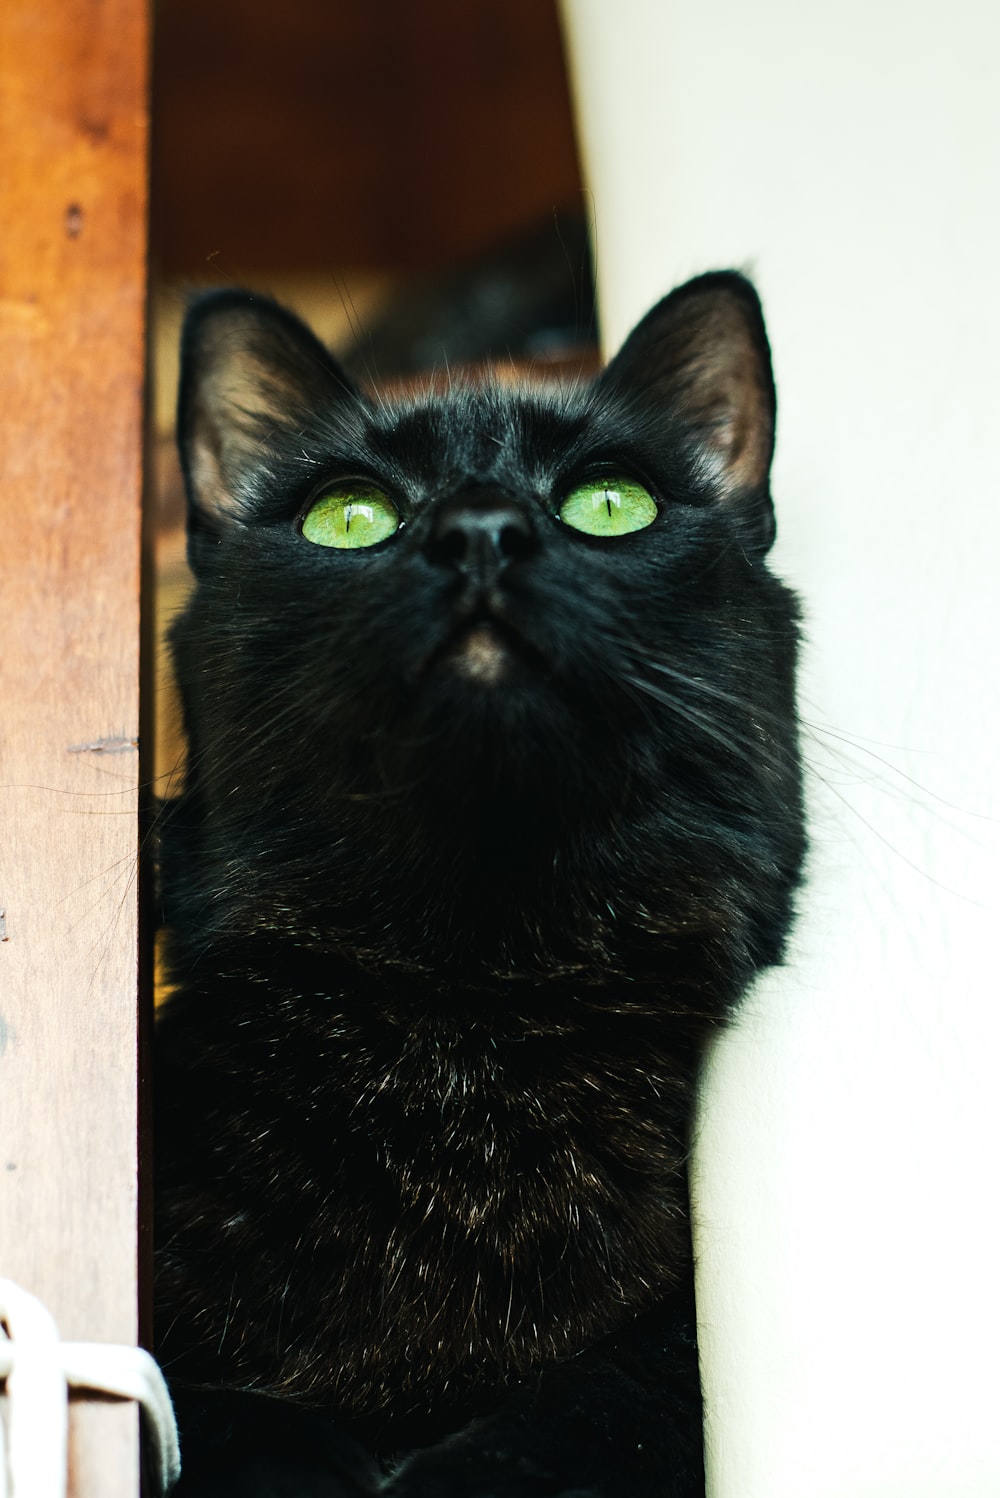 Spiritual Meaning Of Black Cat